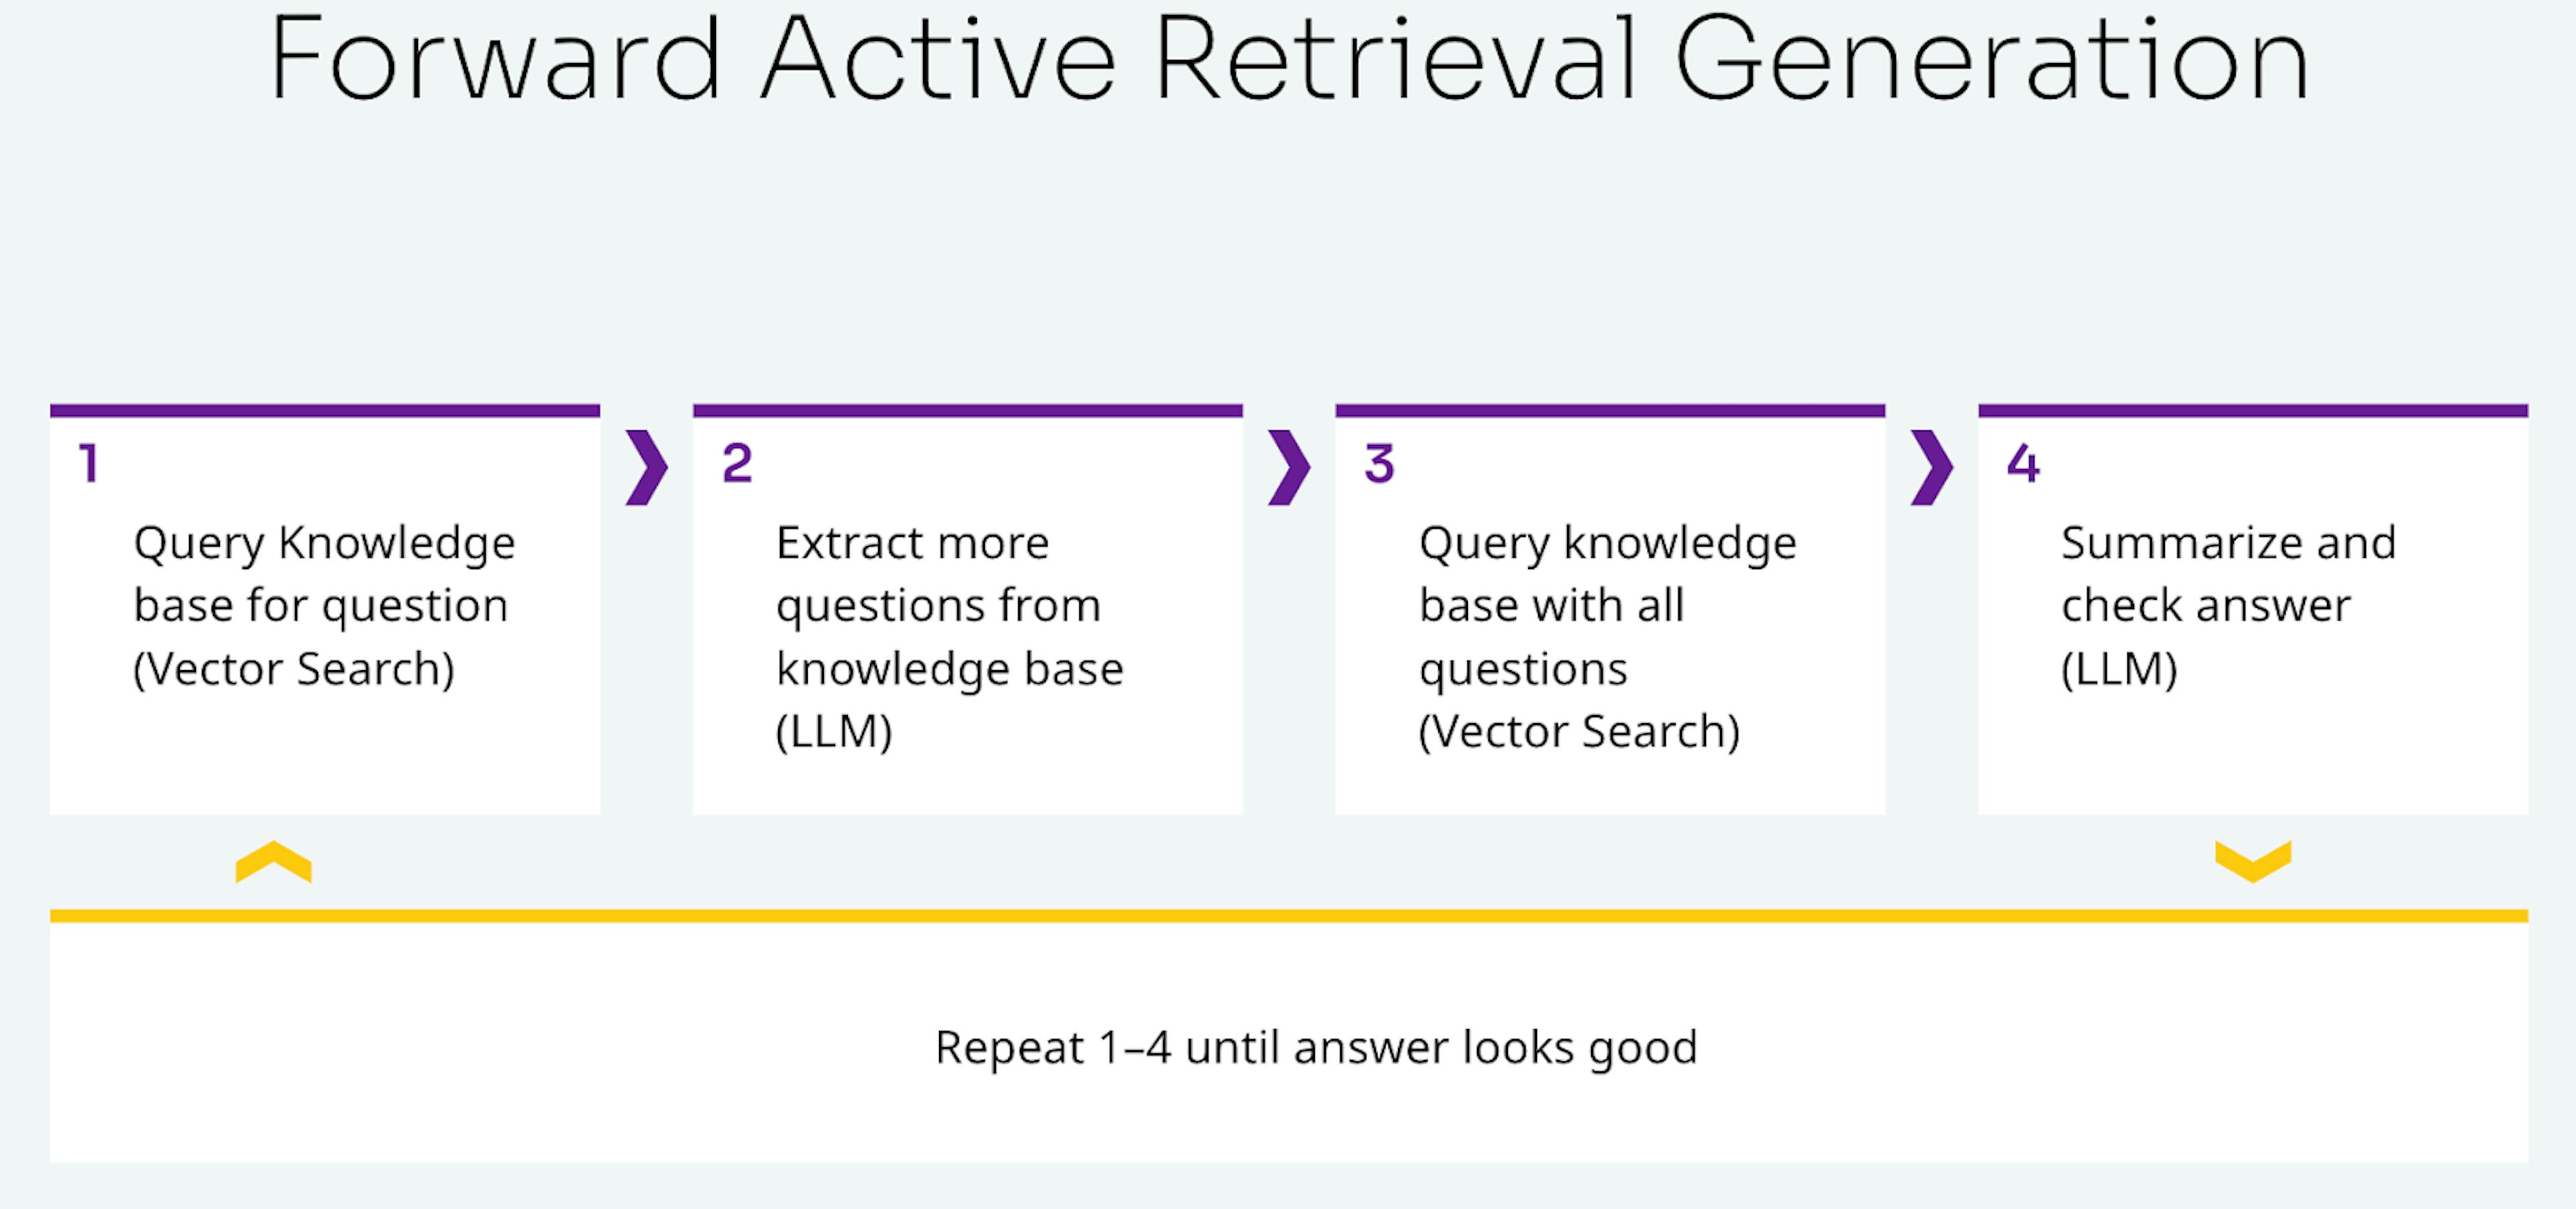 Forward active retrieval generation